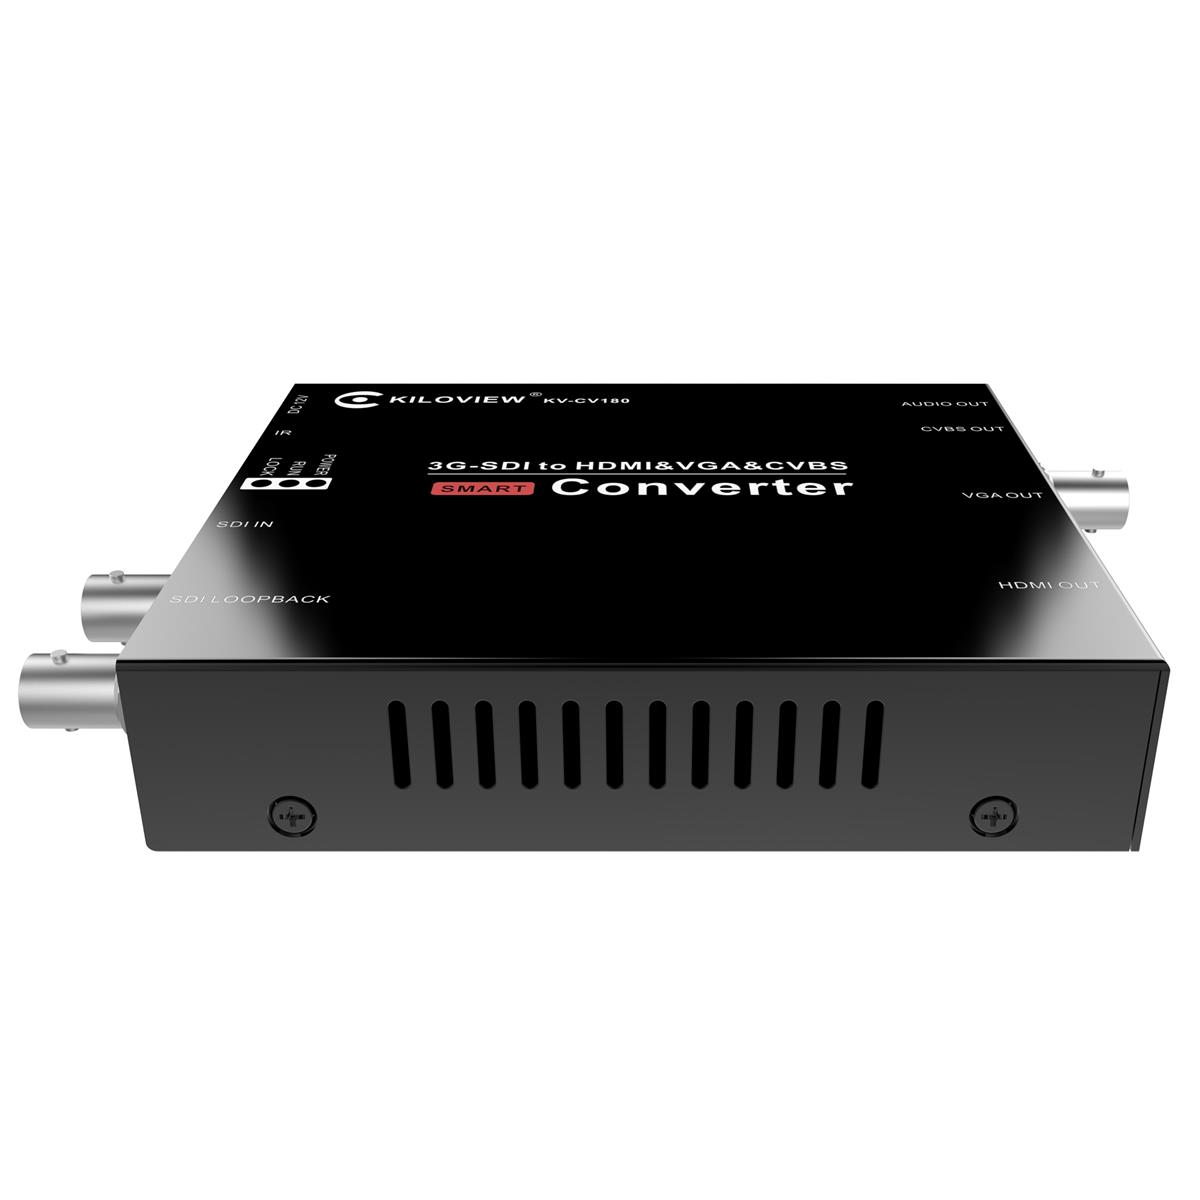 Image of Kiloview CV180 SDI to HDMI/VGA/AV Video Converter